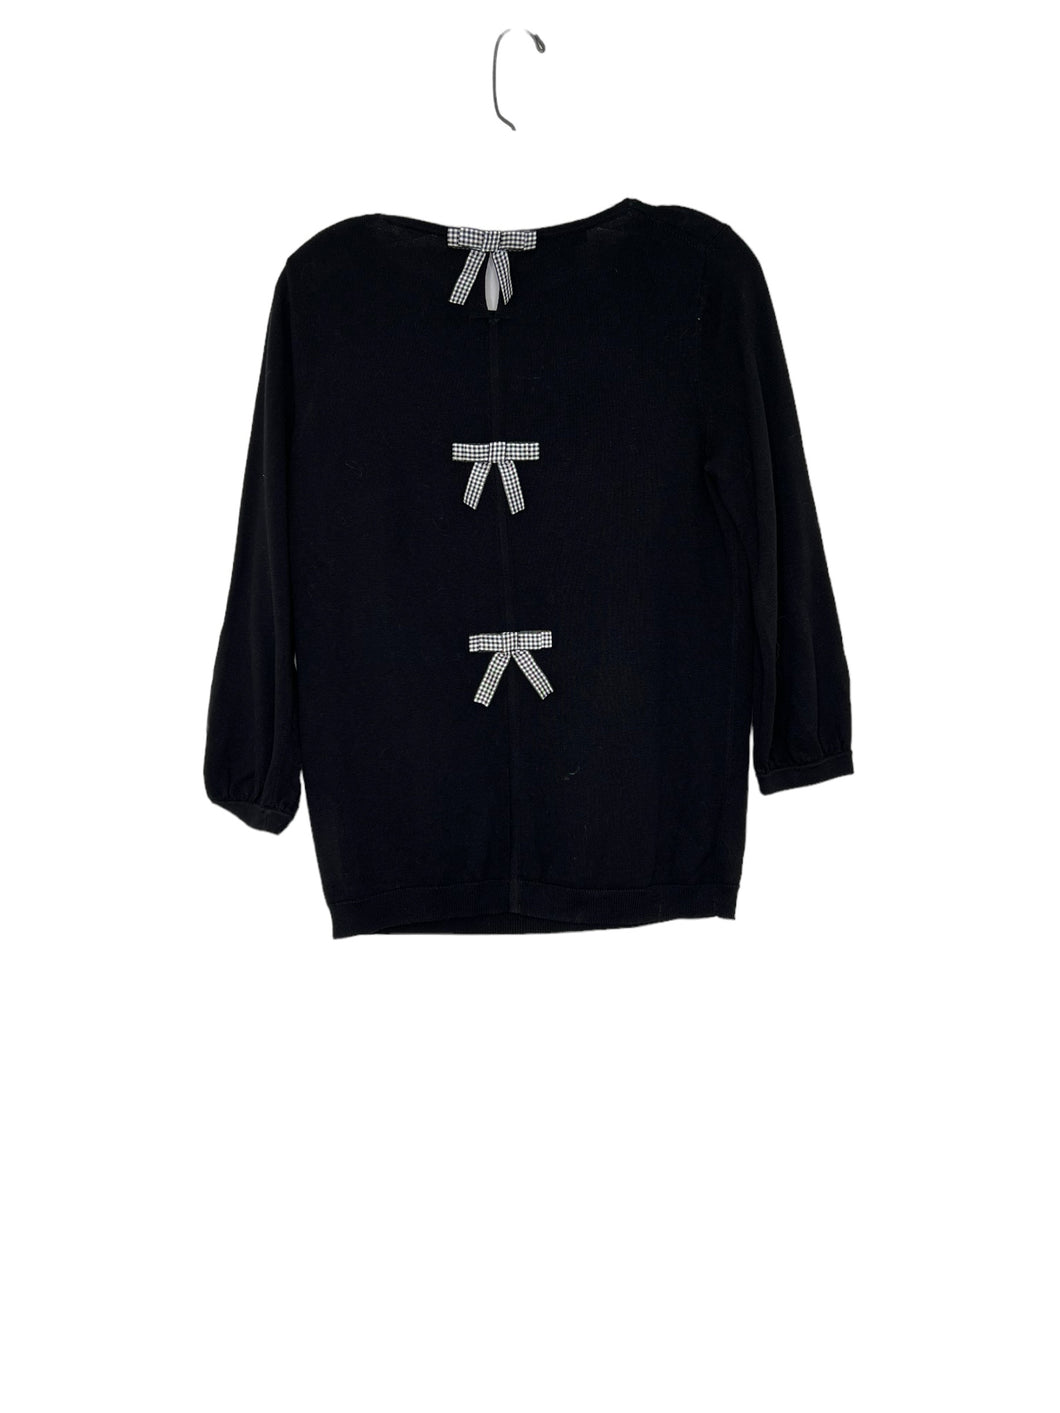 Talbots Size Small Black Sweater- Ladies